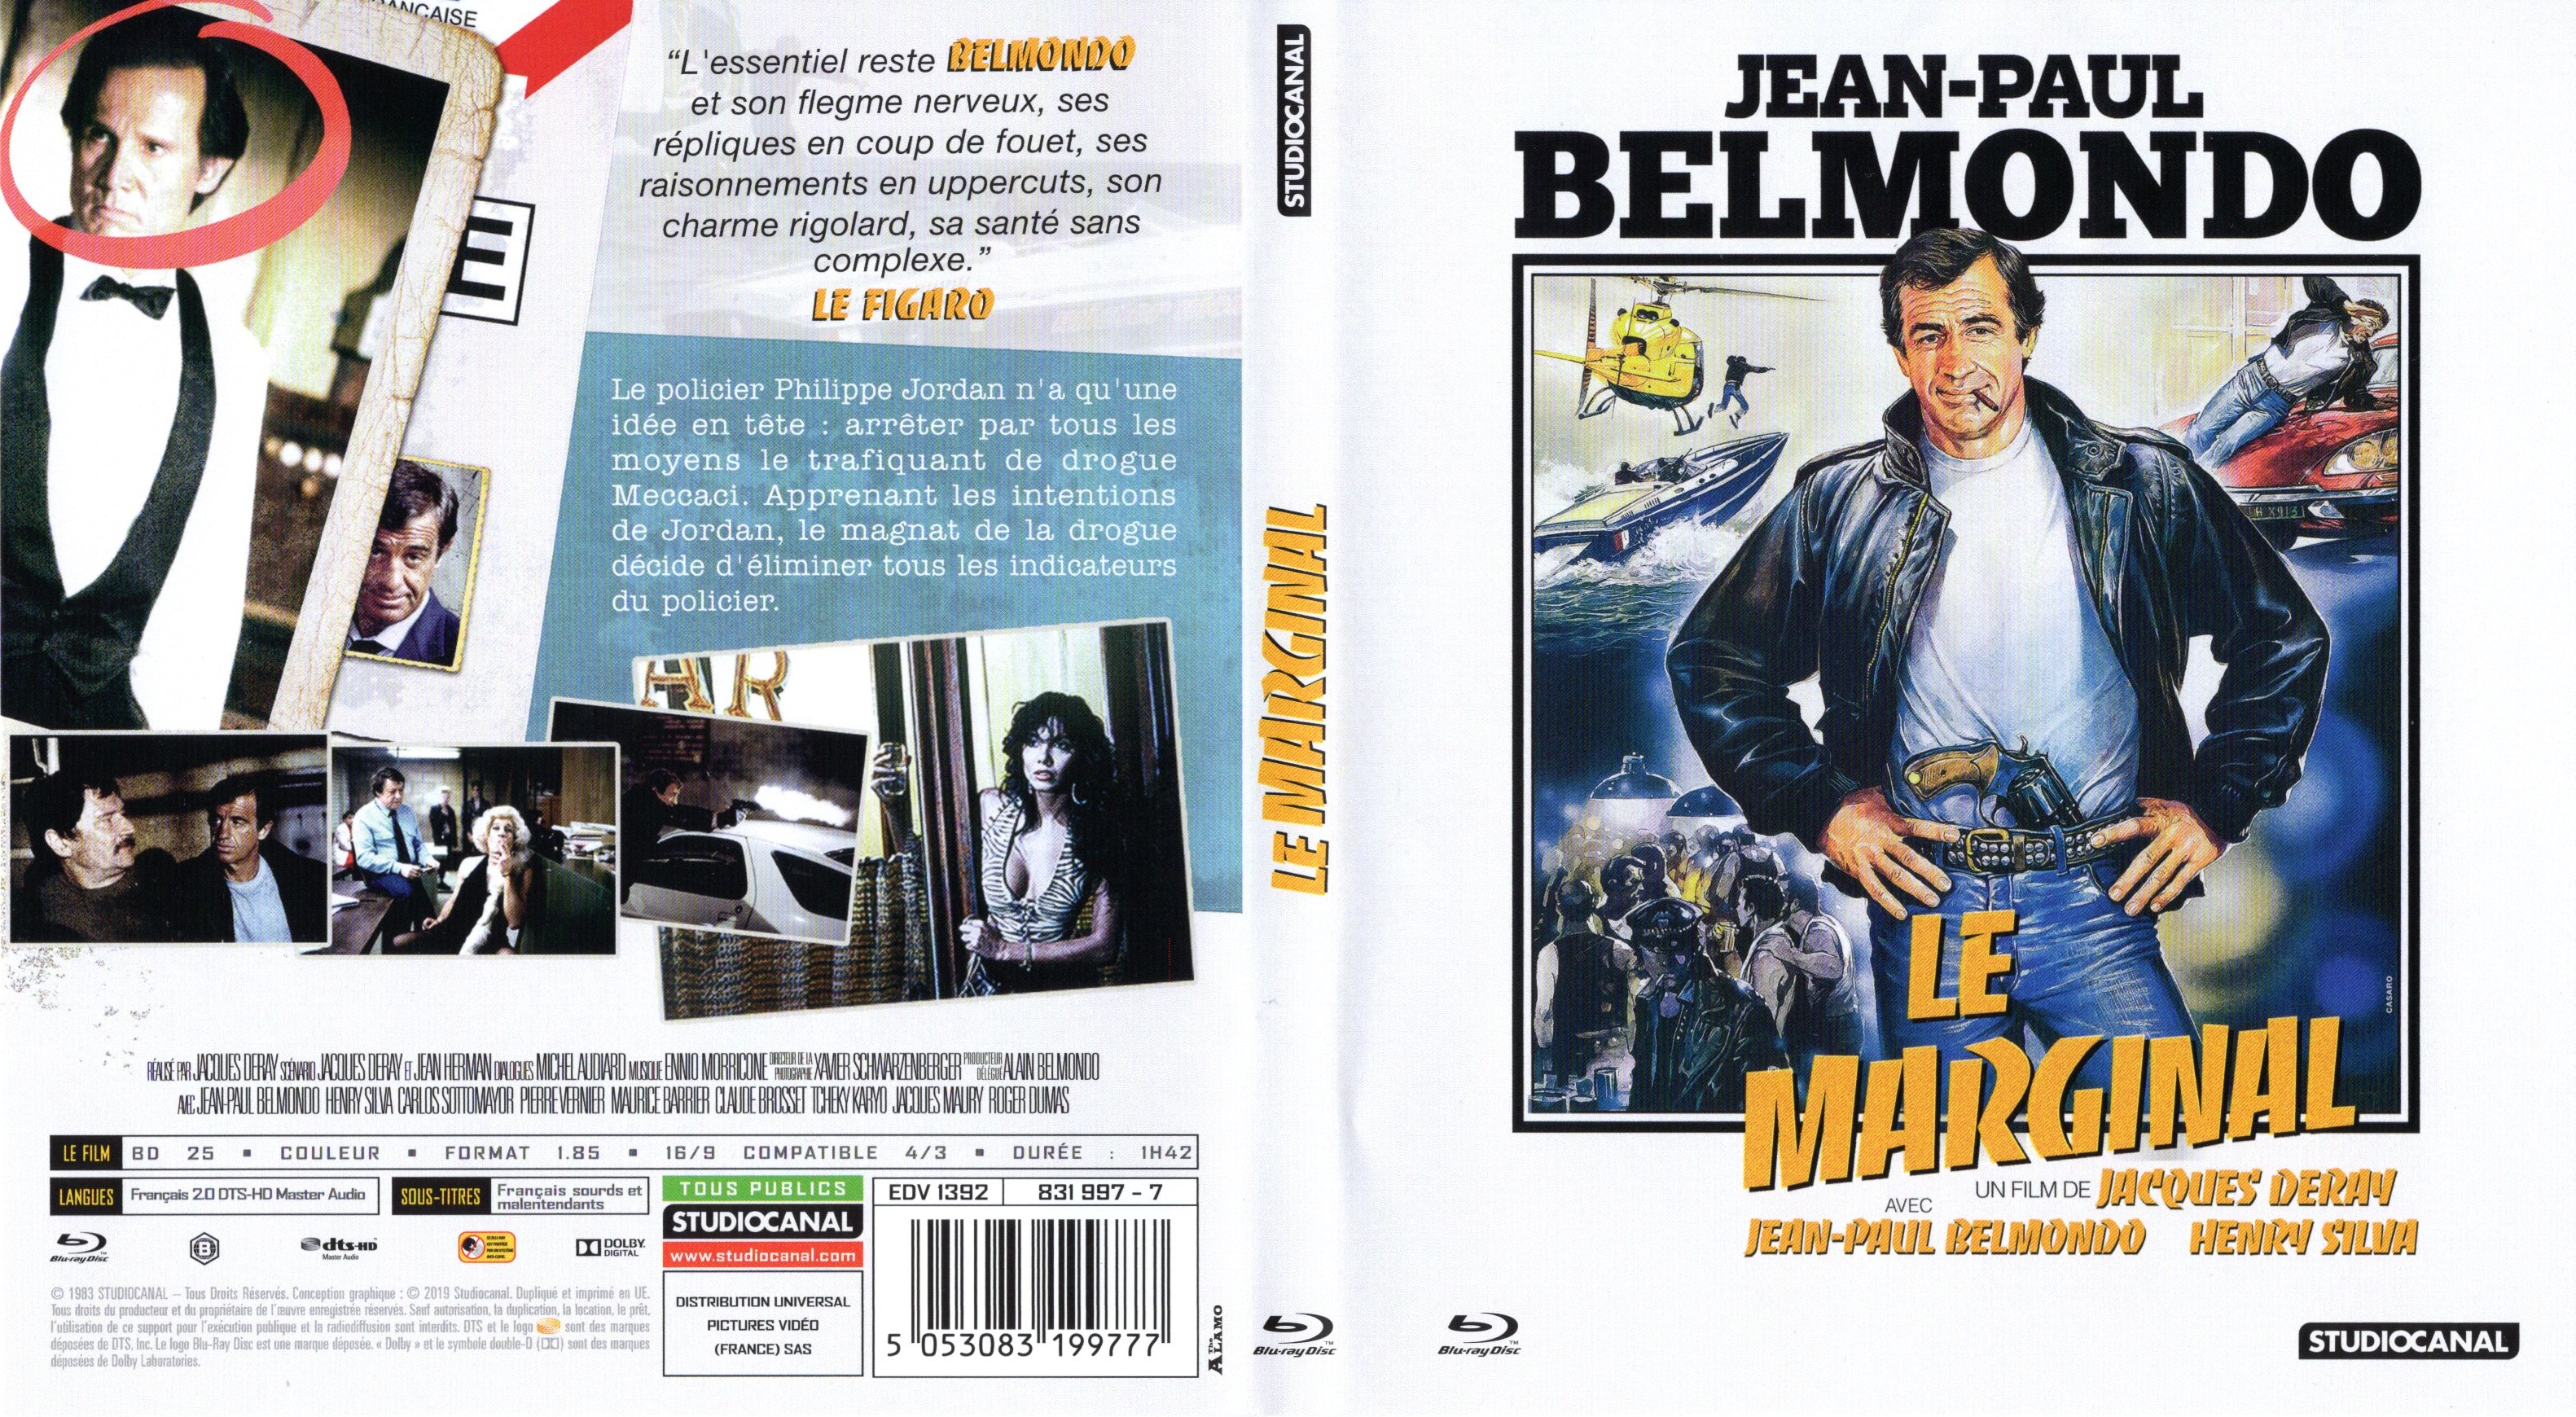 Jaquette DVD Le marginal (BLU-RAY)